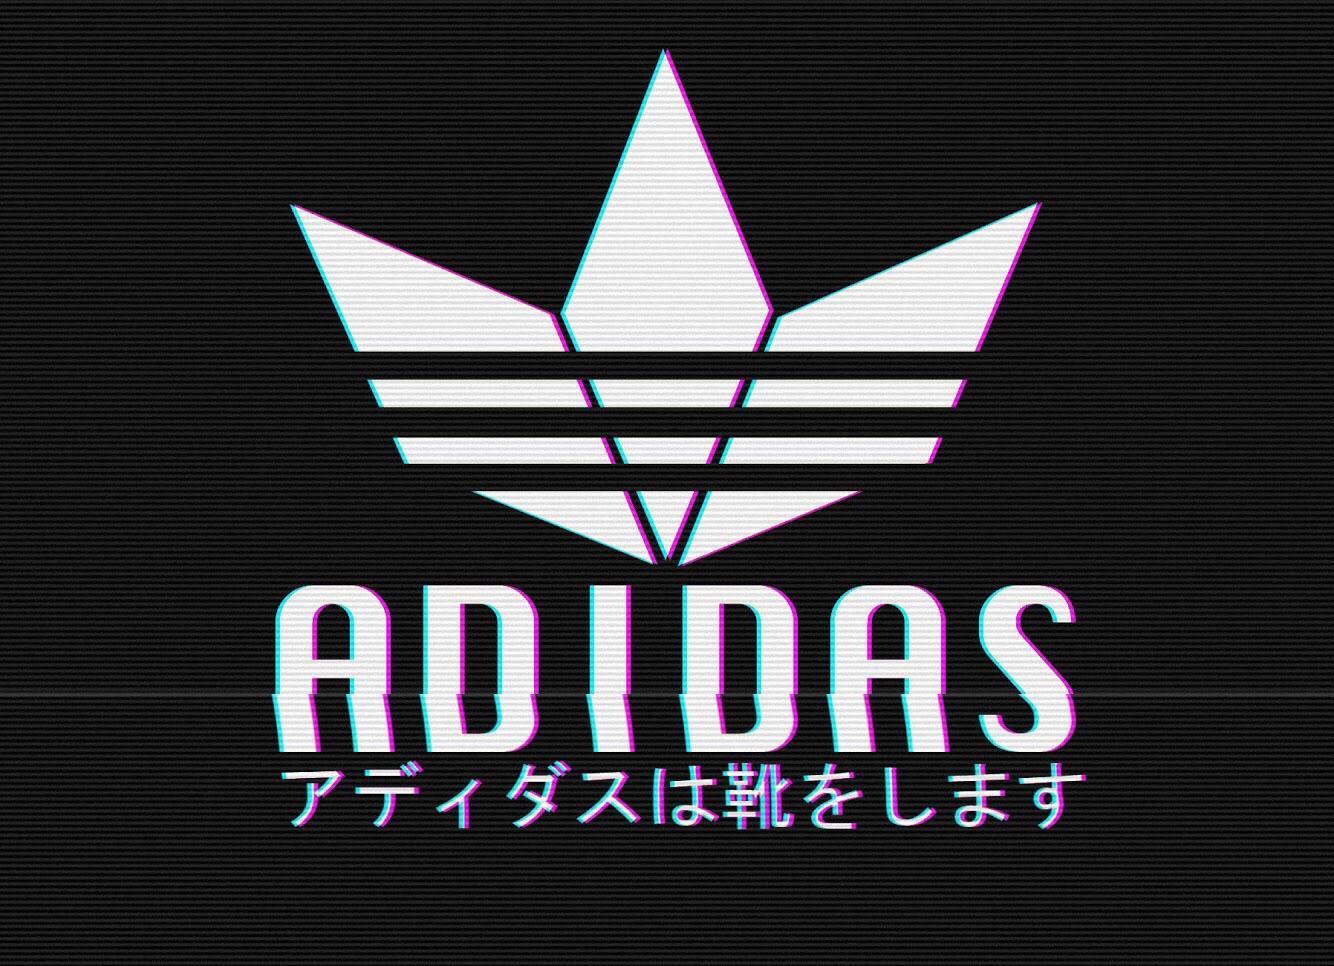 Sick Adidas Logo - My contribution to the ongoing logo saga